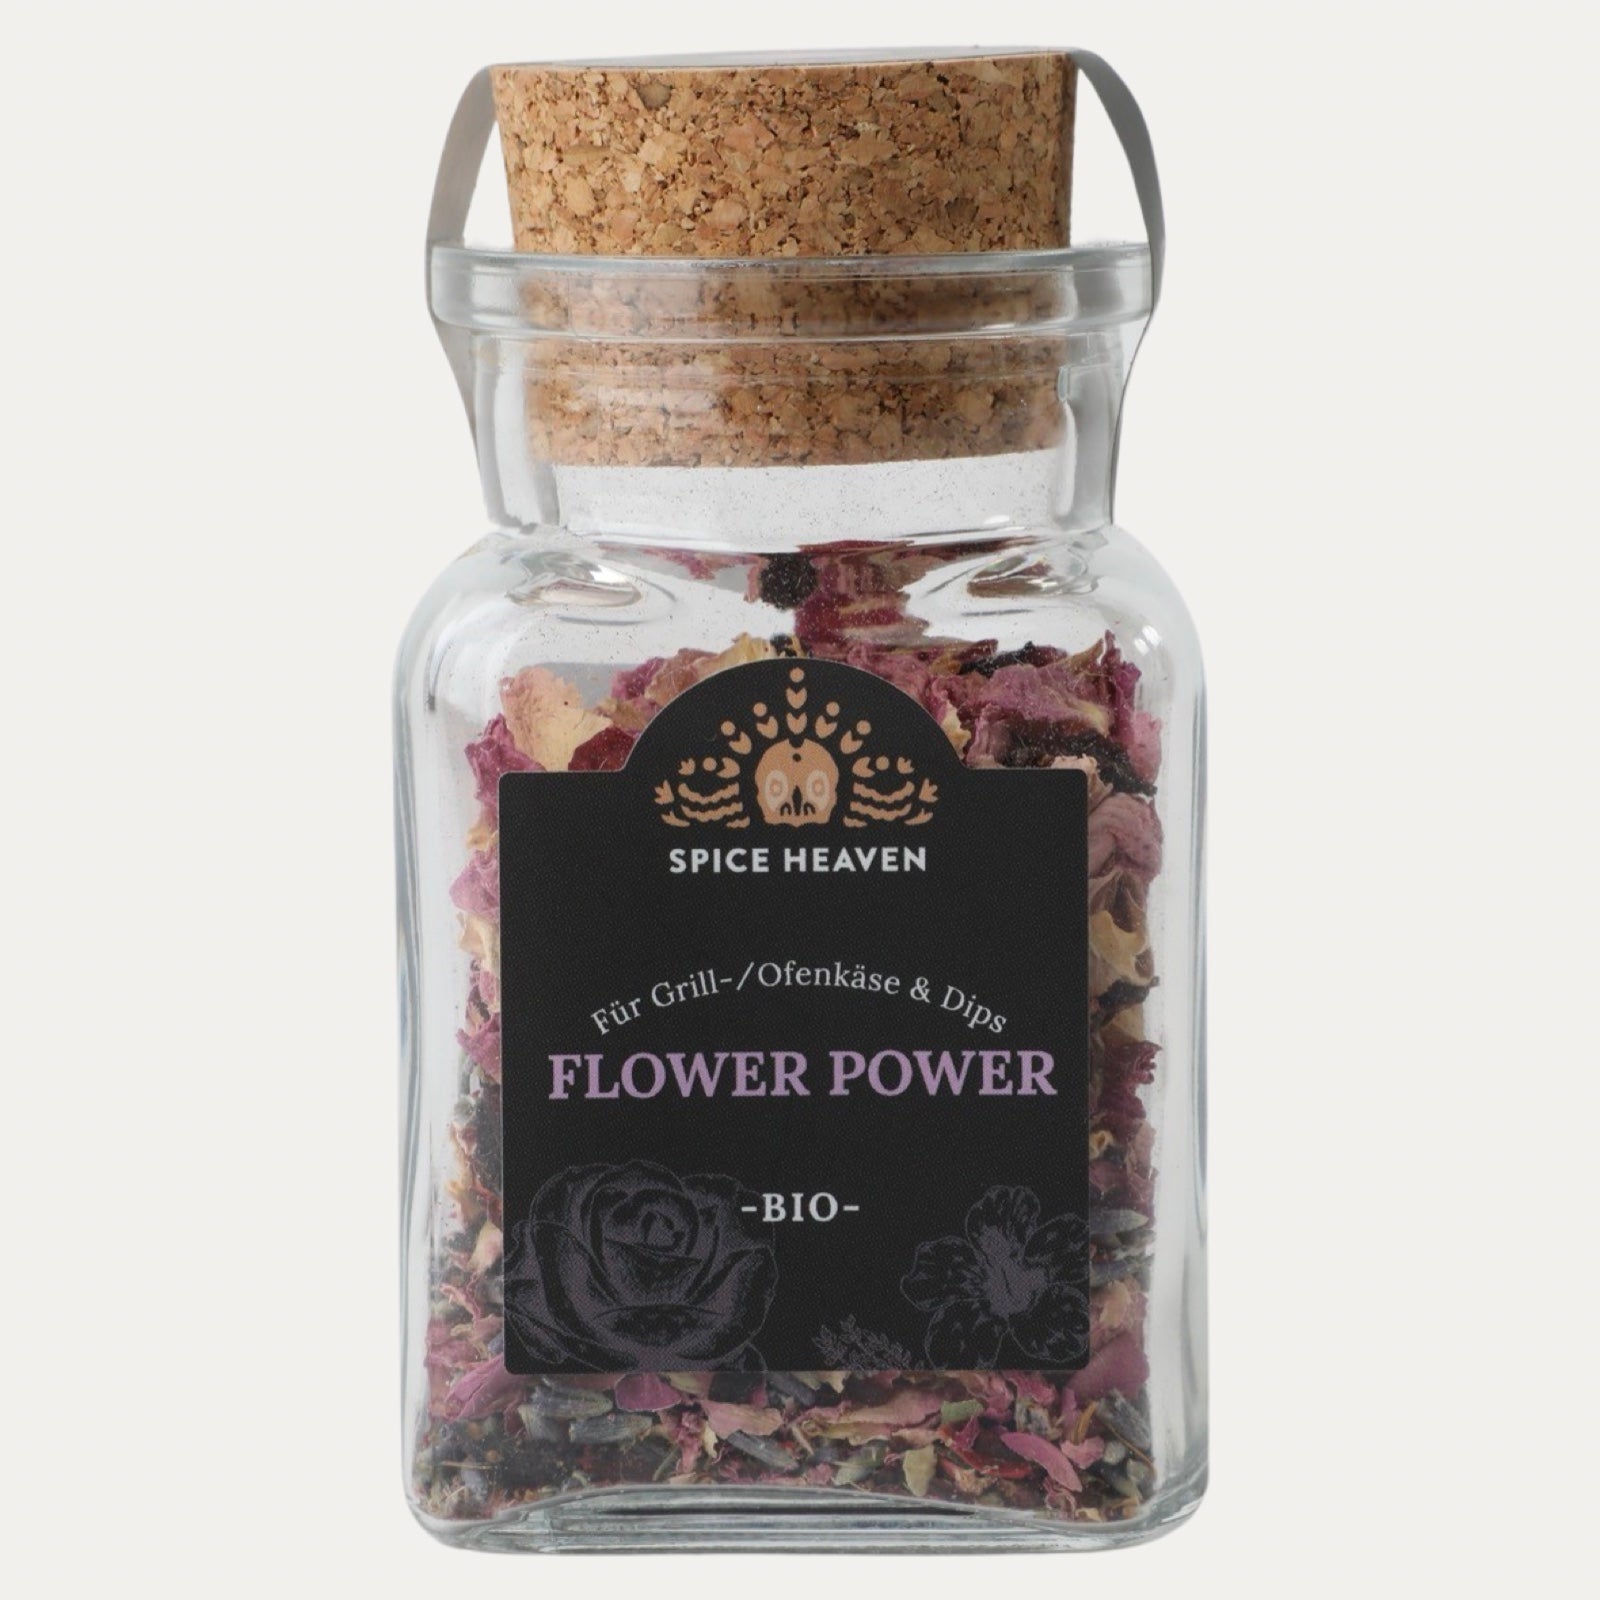 Flower Power, 15g - Spice Heaven